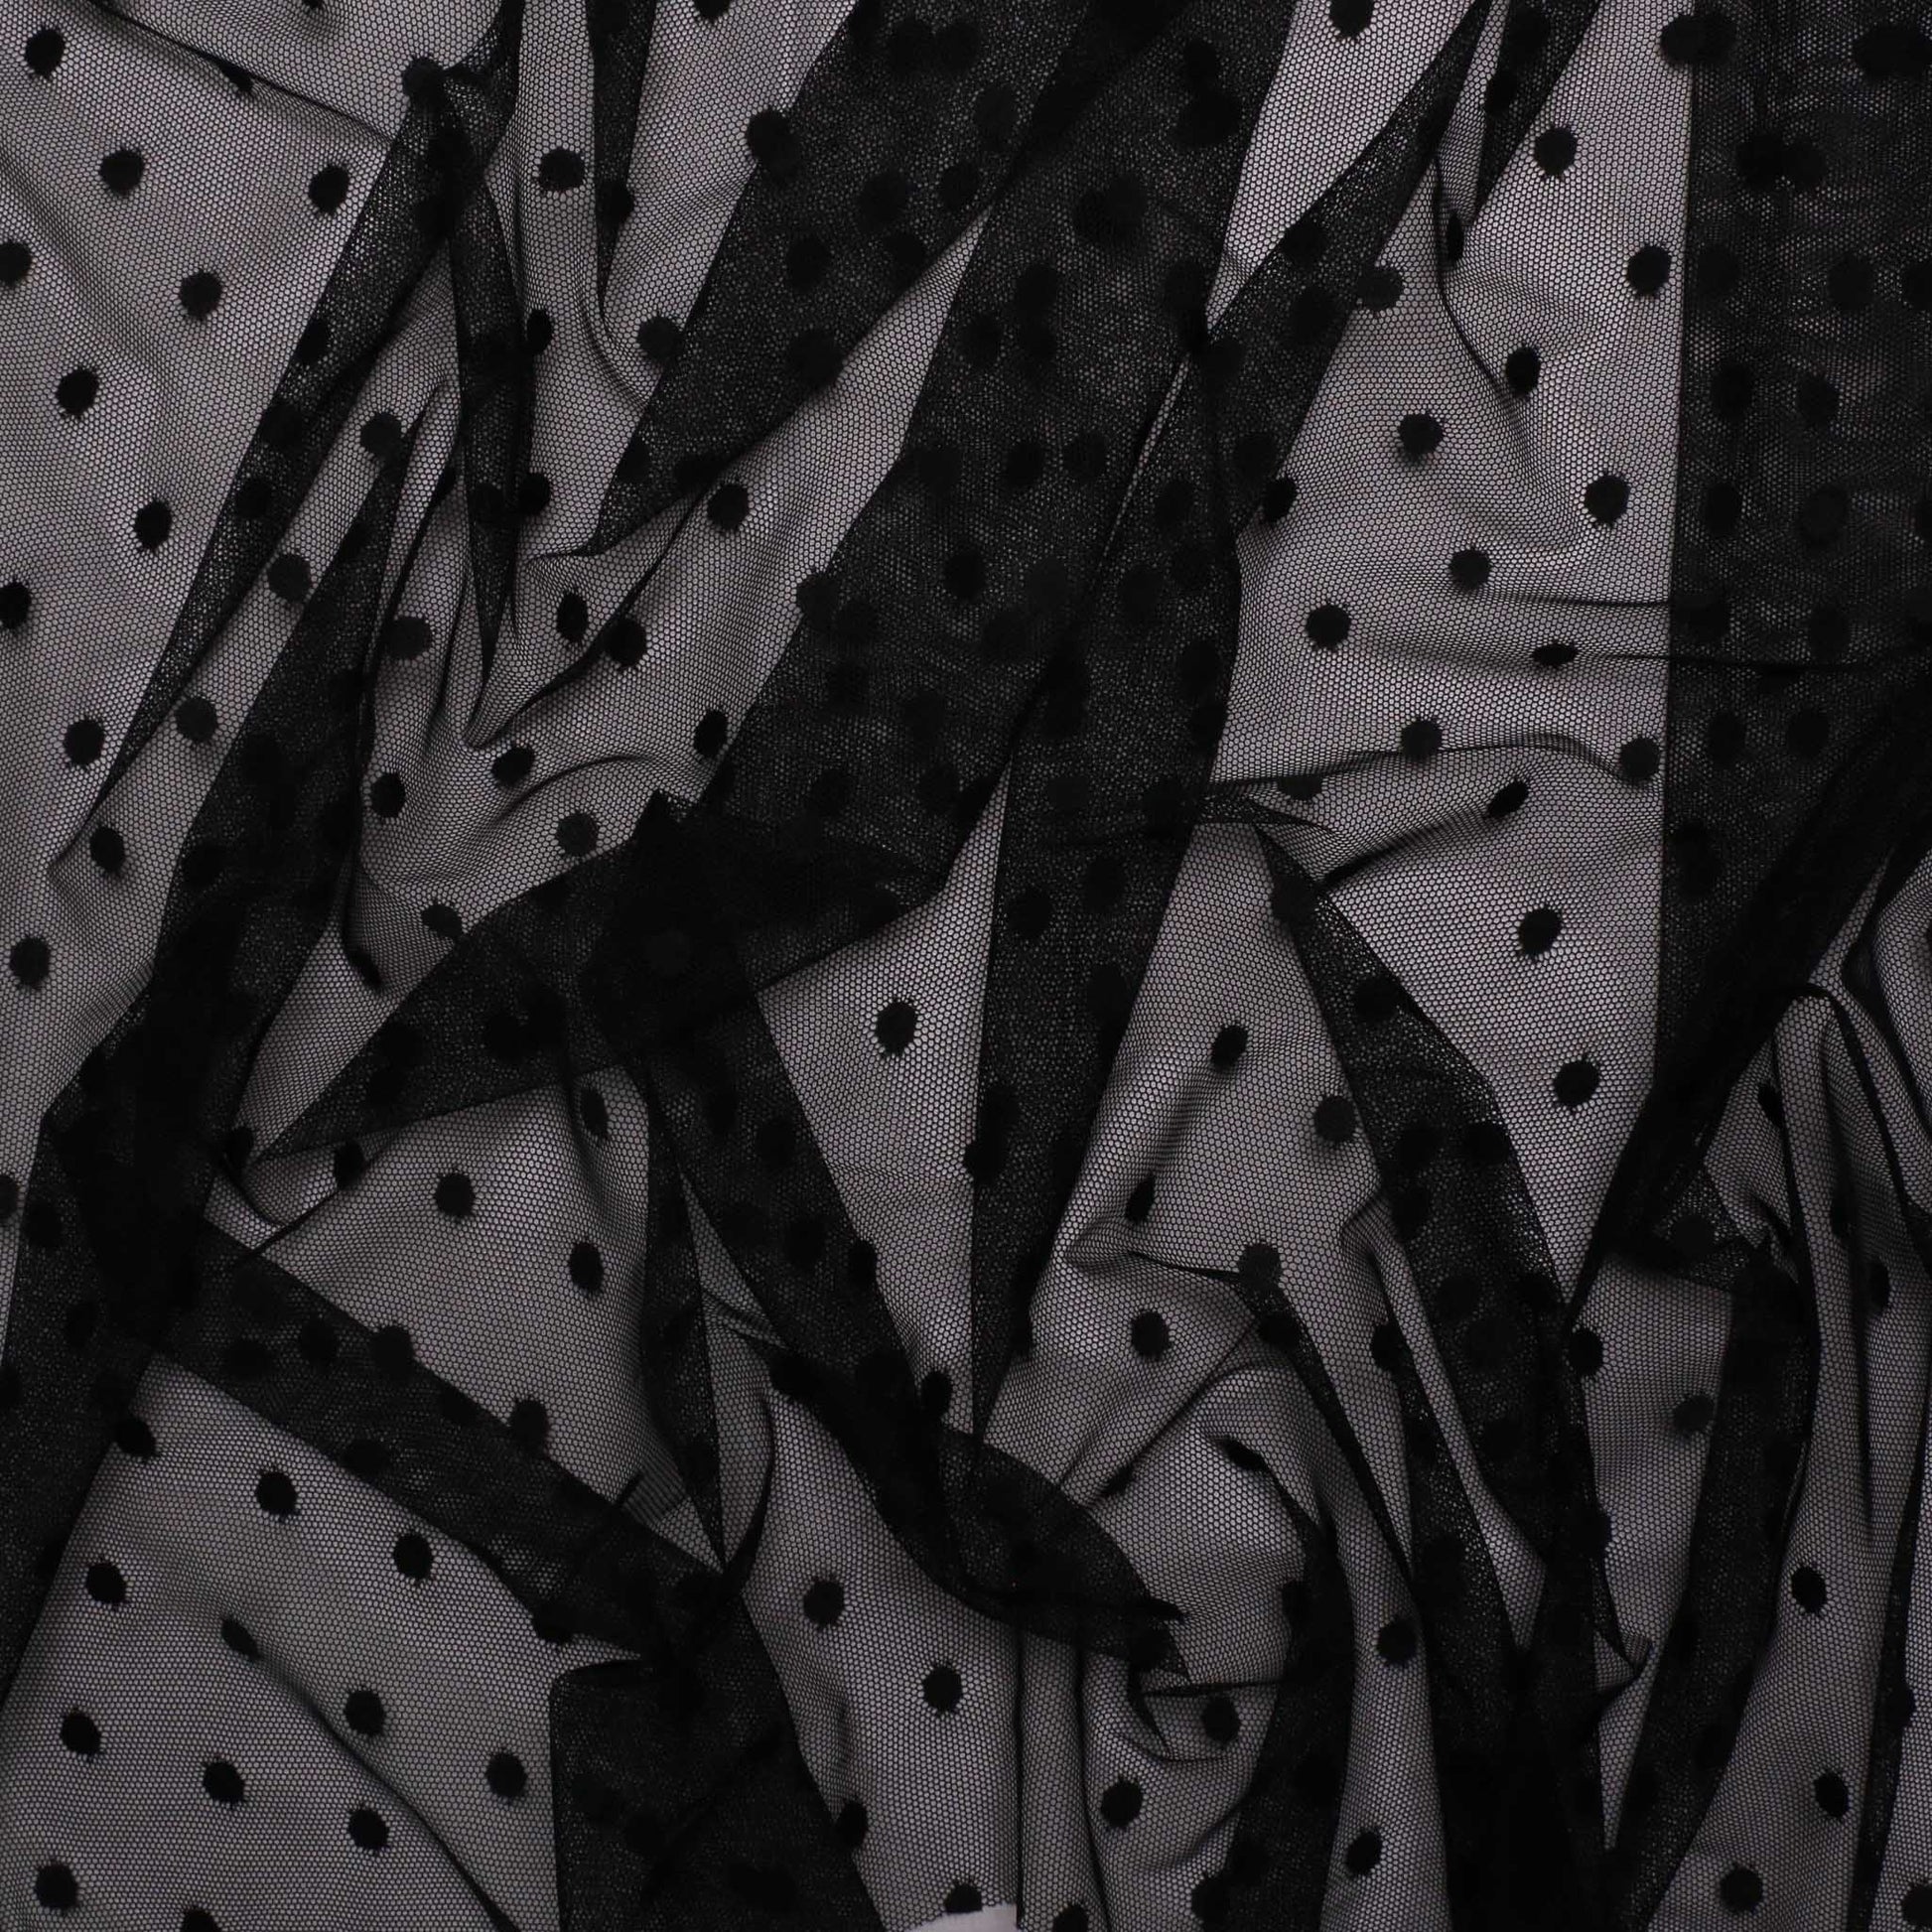 black dressmaking netting fabric with polka dot pattern